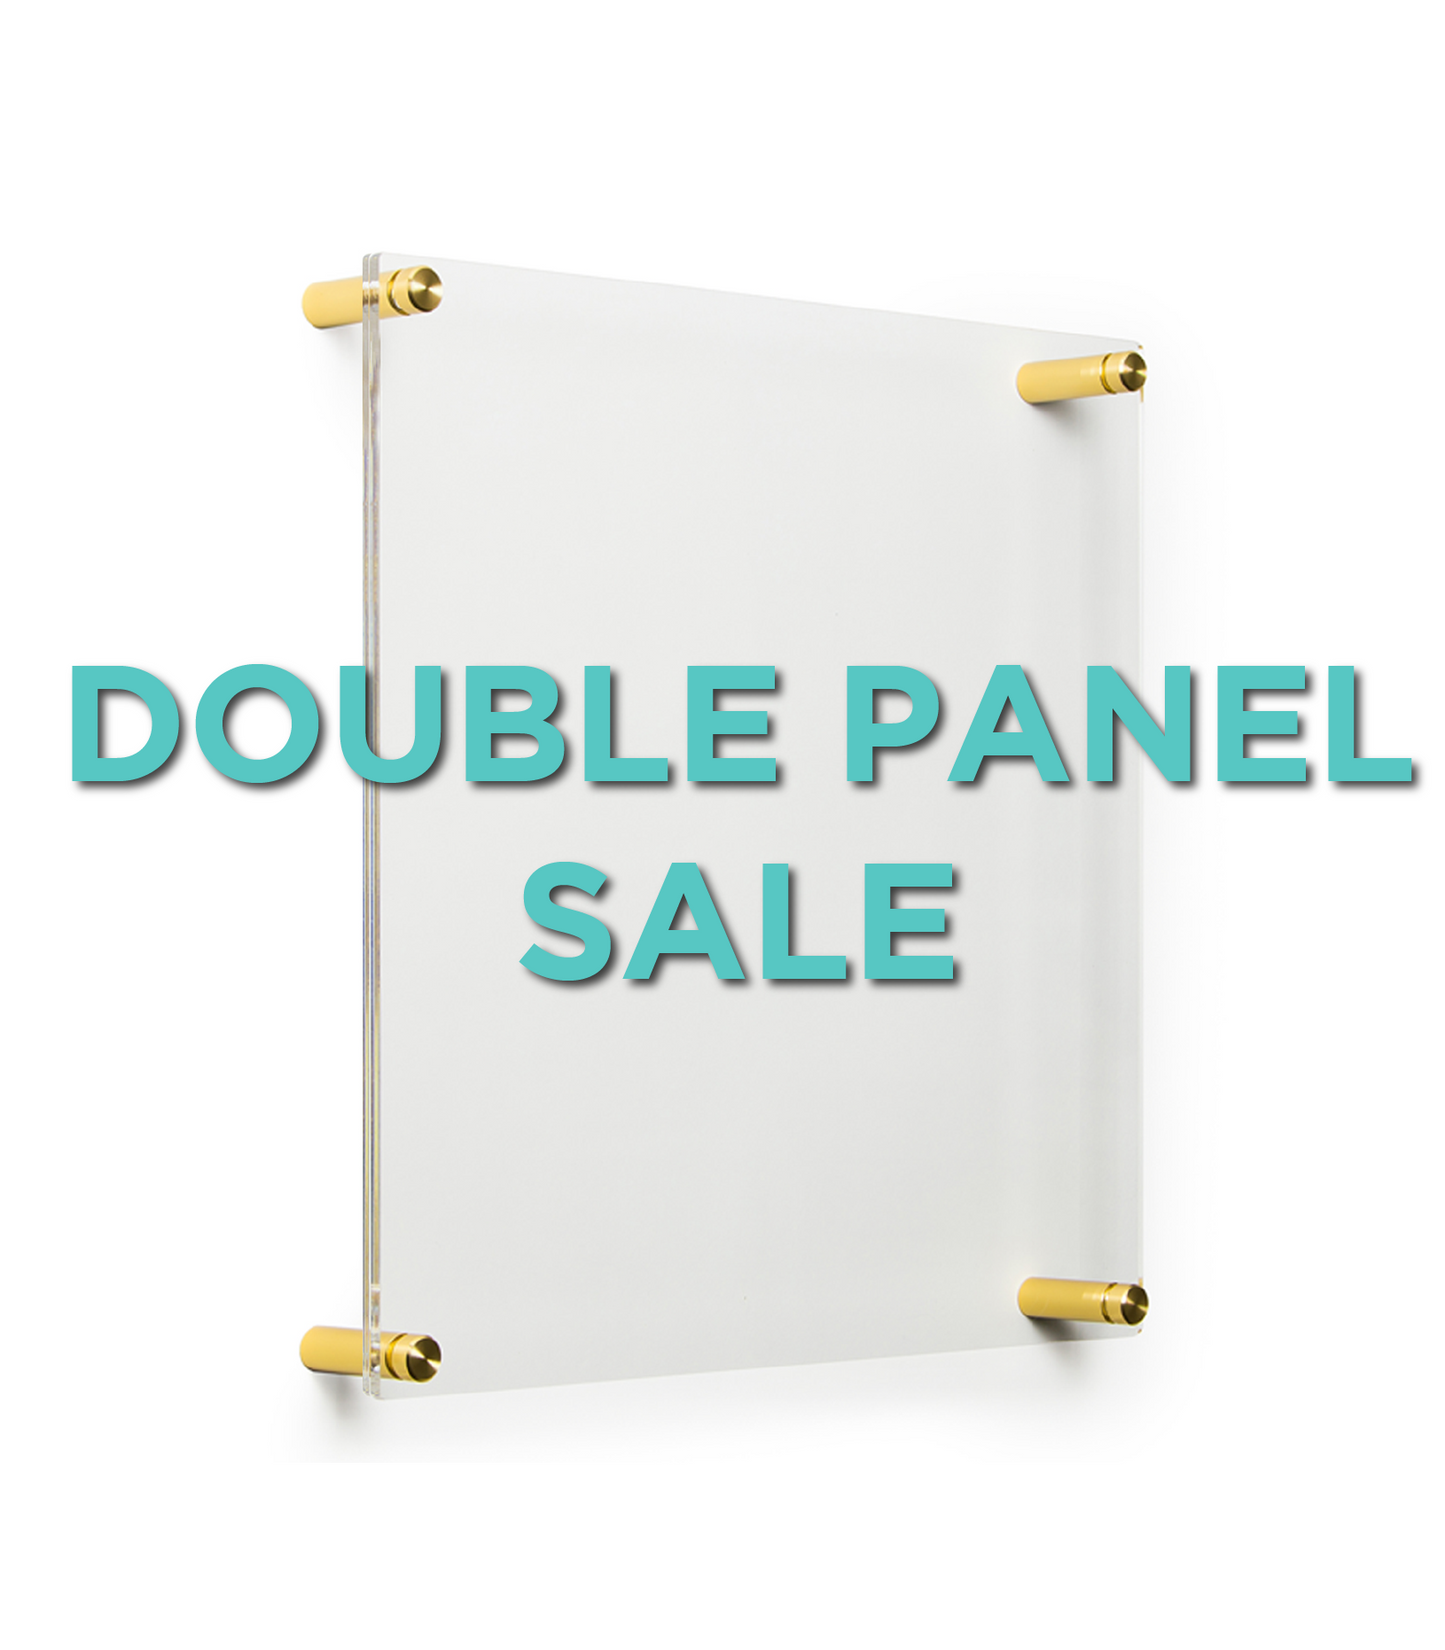 Double Panel Frames Black Friday Sale